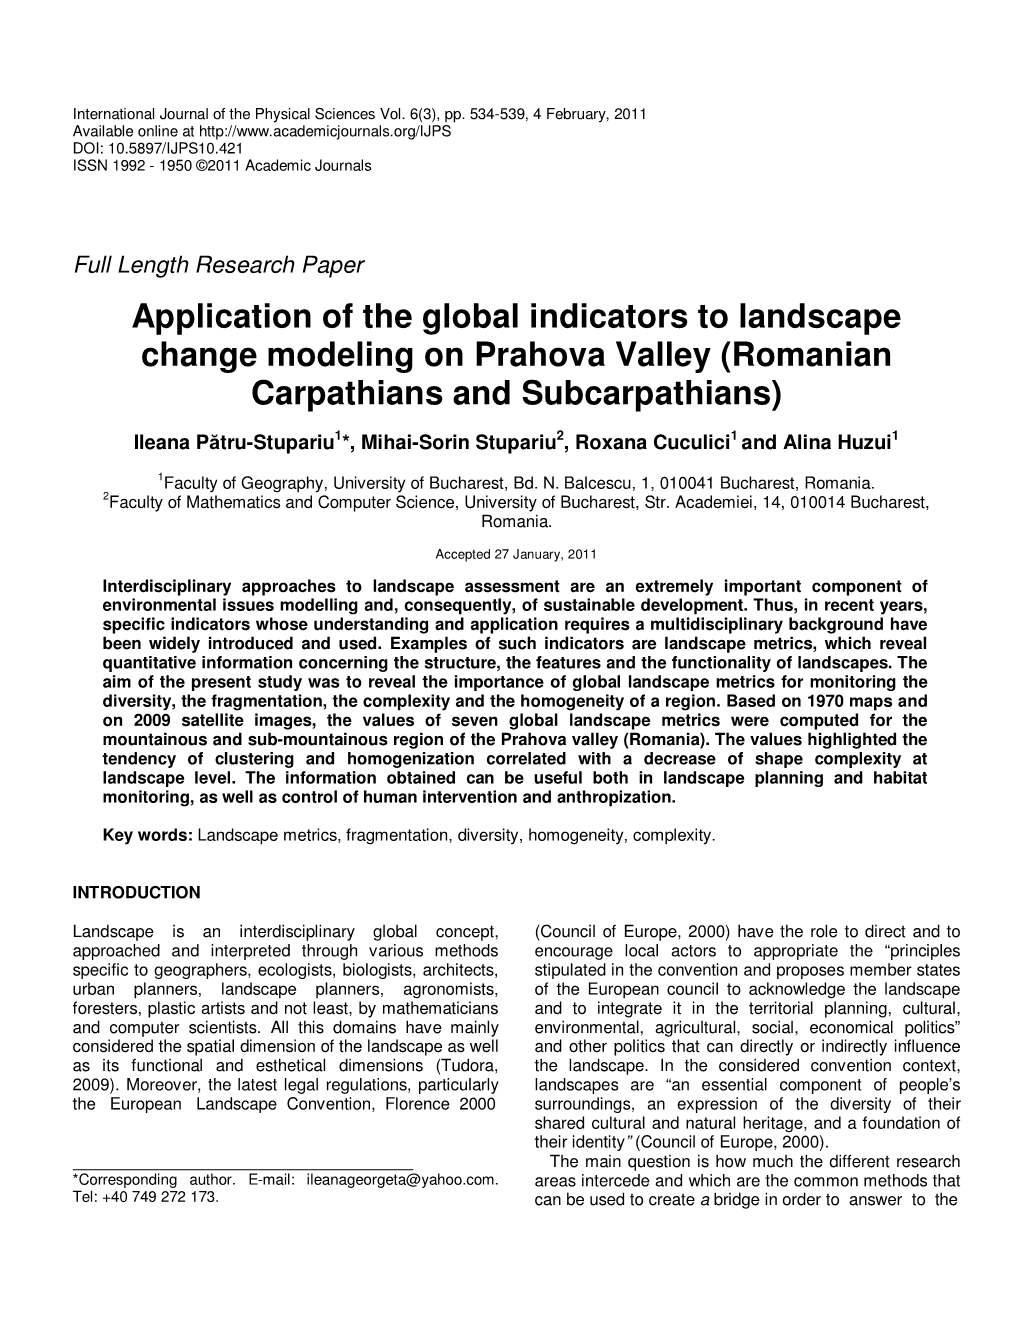 Application of the Global Indicators to Landscape Change Modeling on Prahova Valley (Romanian Carpathians and Subcarpathians)